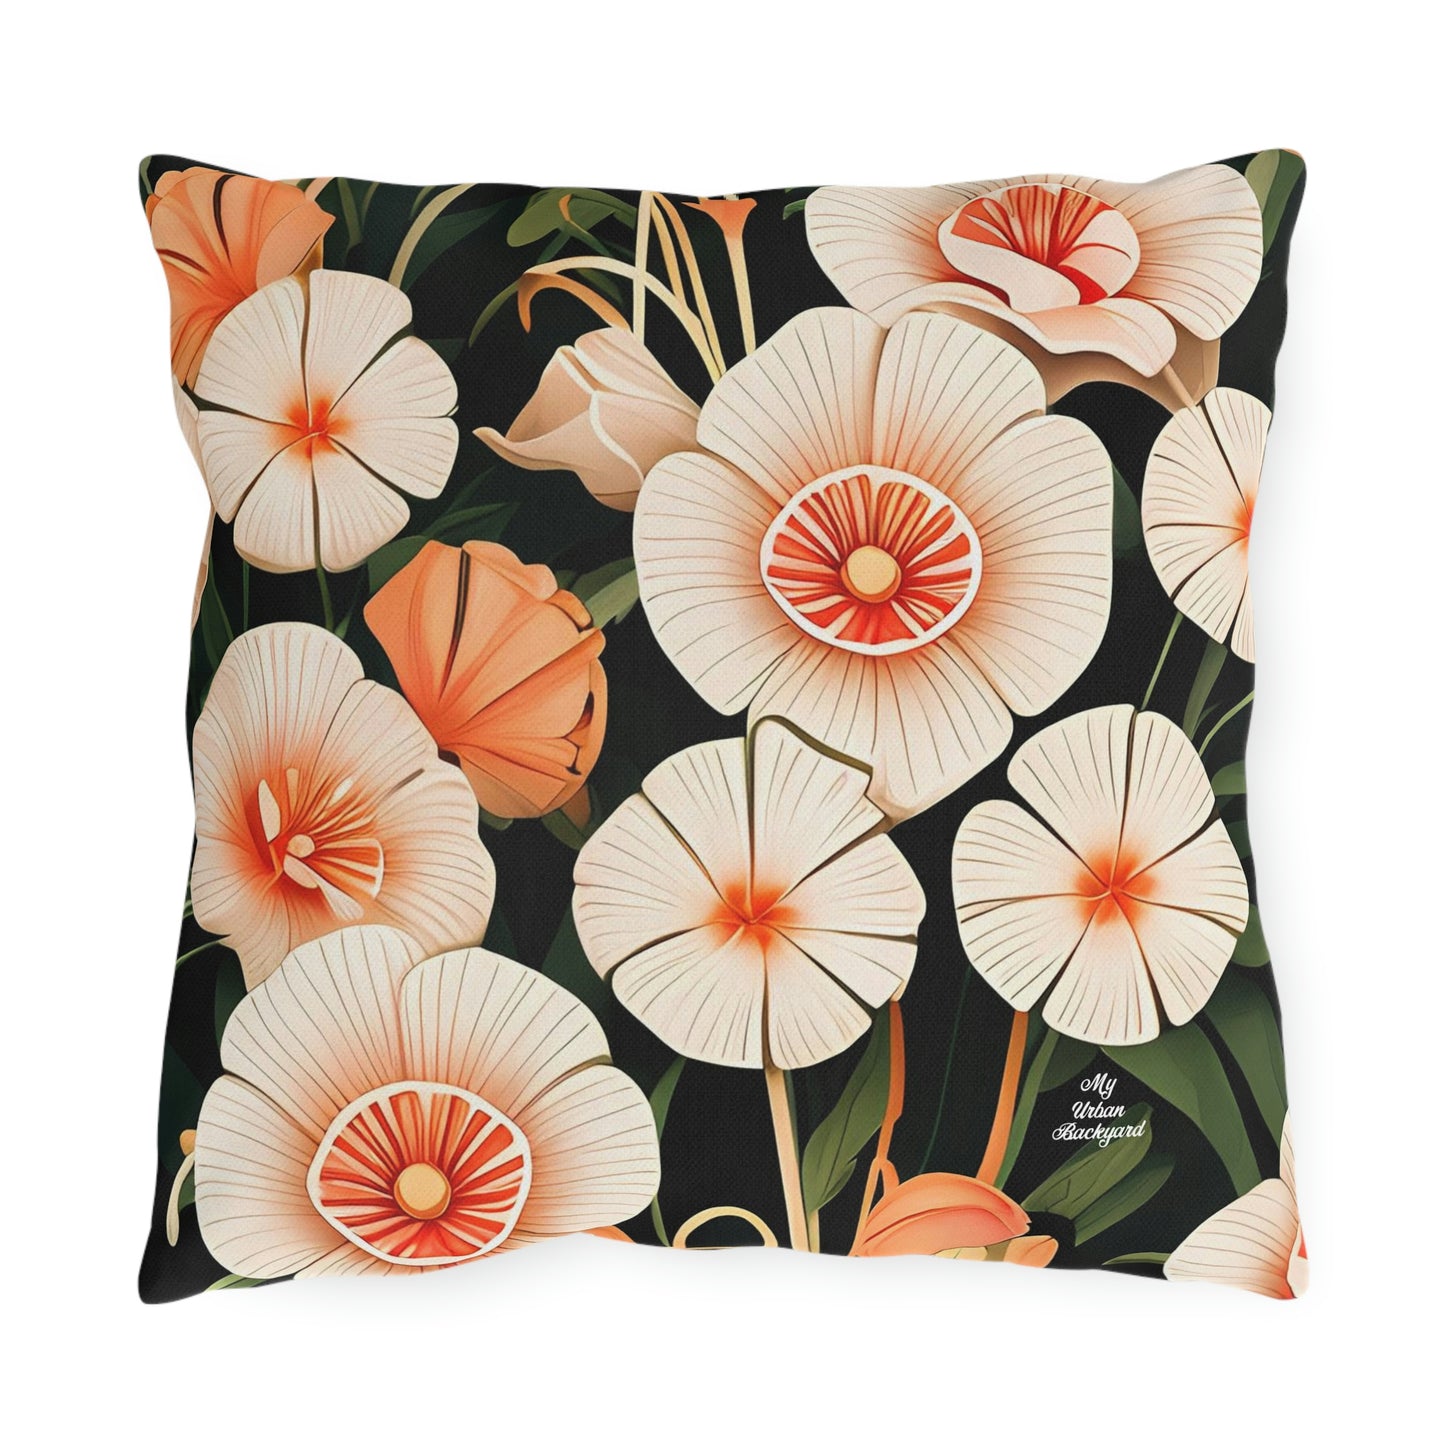 Art Deco Flowers, Versatile Throw Pillow - Home or Office Decor